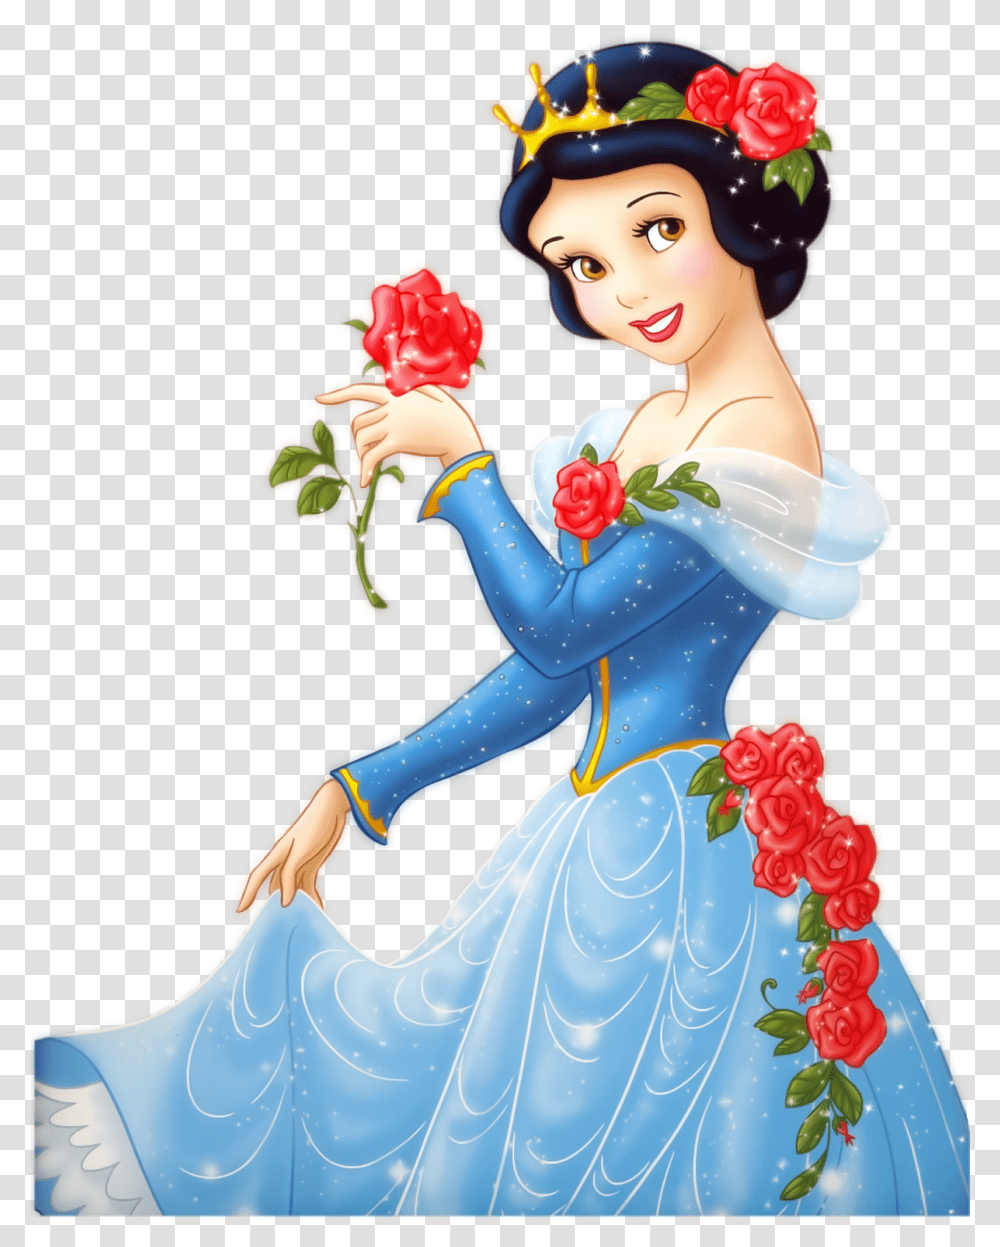 Snow White Cartoon Disney Princess, Person, Leisure Activities, Plant, Dance Pose Transparent Png